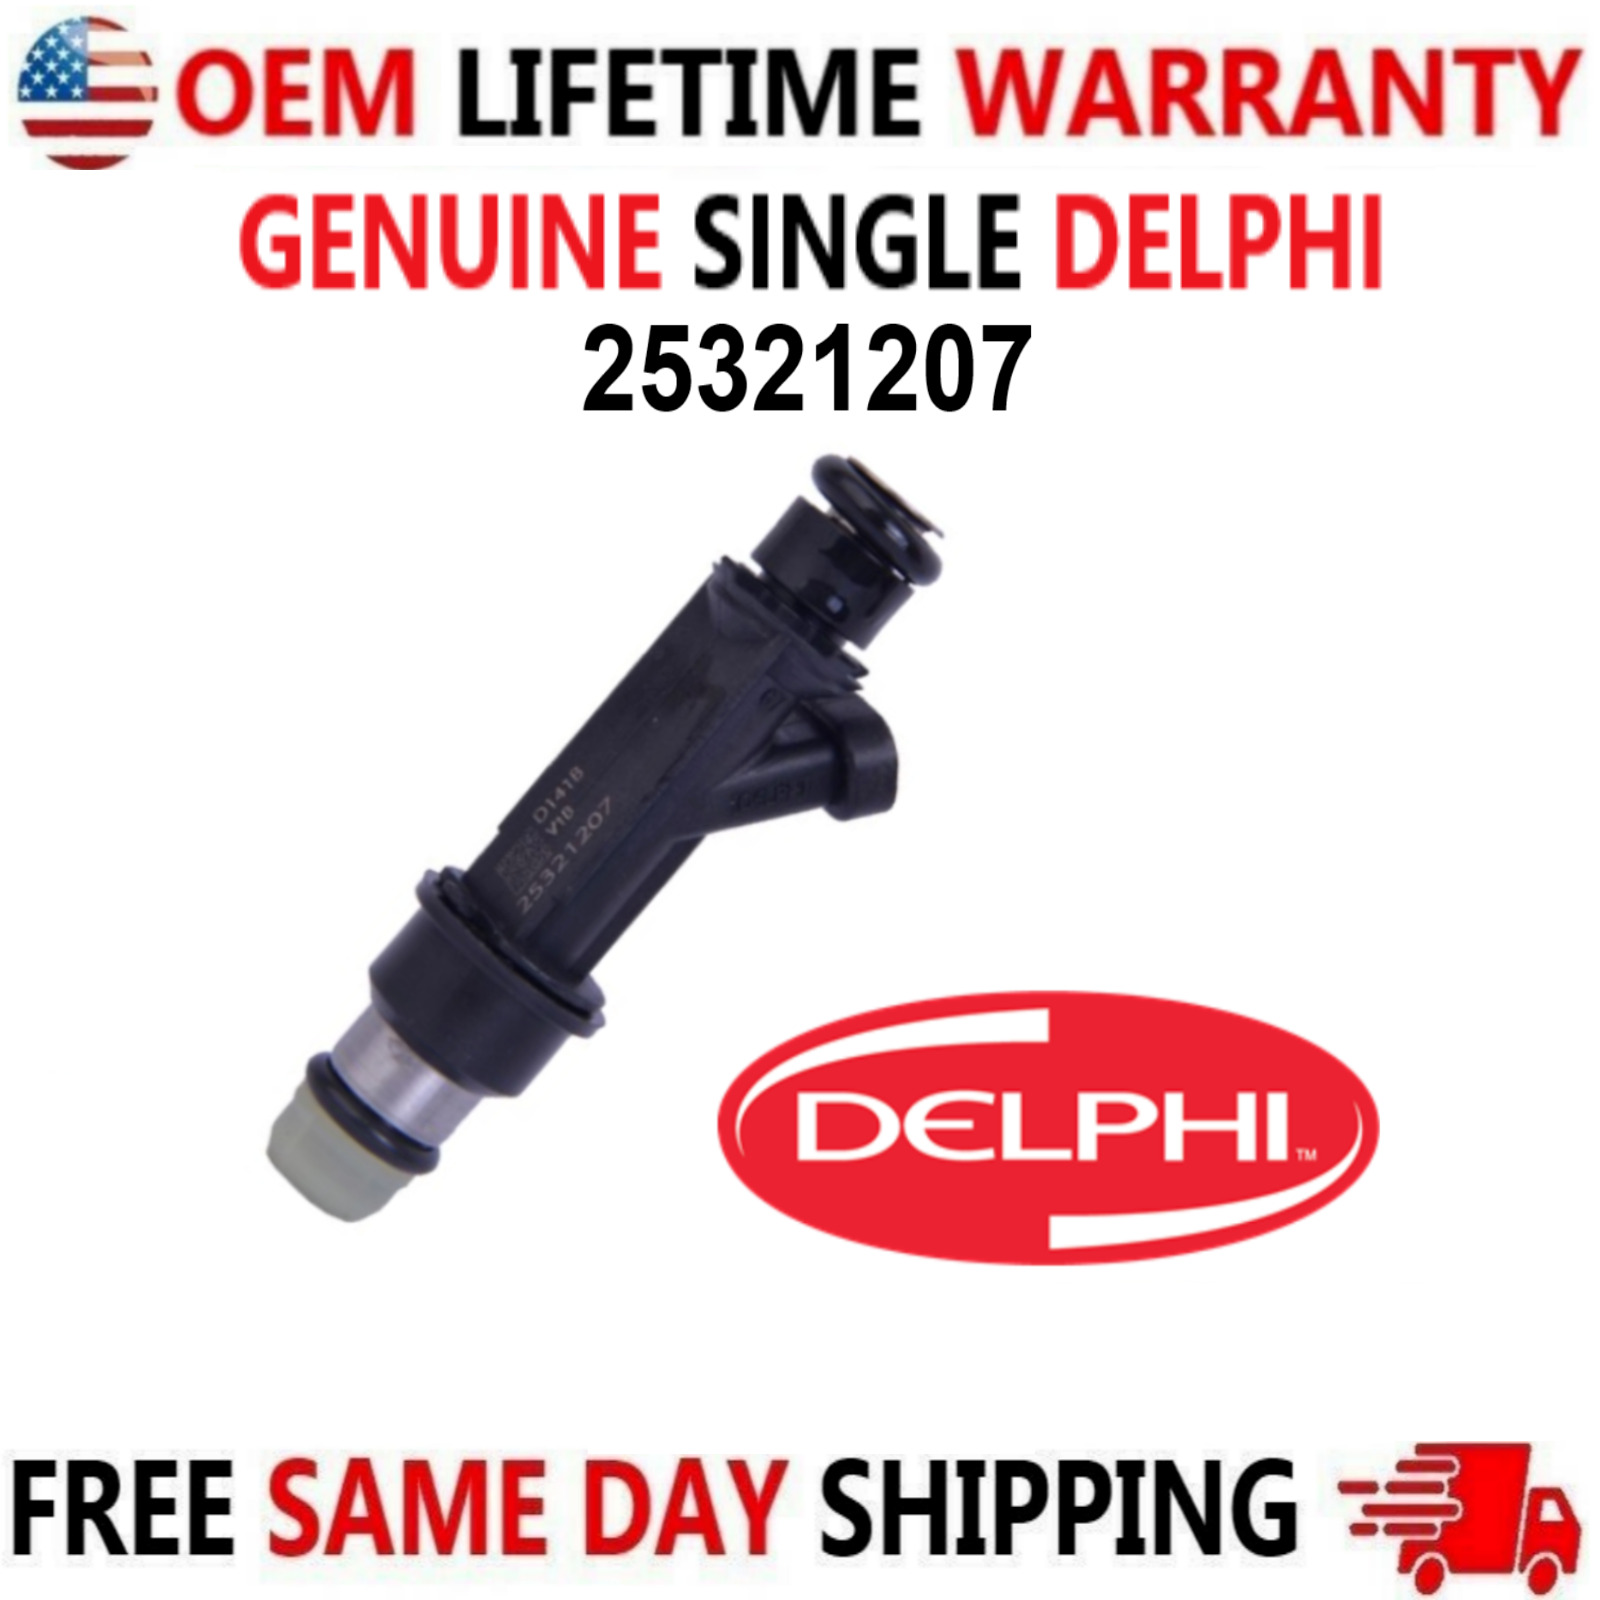 OEM Single Genuine DELPHI fueI Injector for 1999-02 Oldsmobile Intrigue 3.5L V6